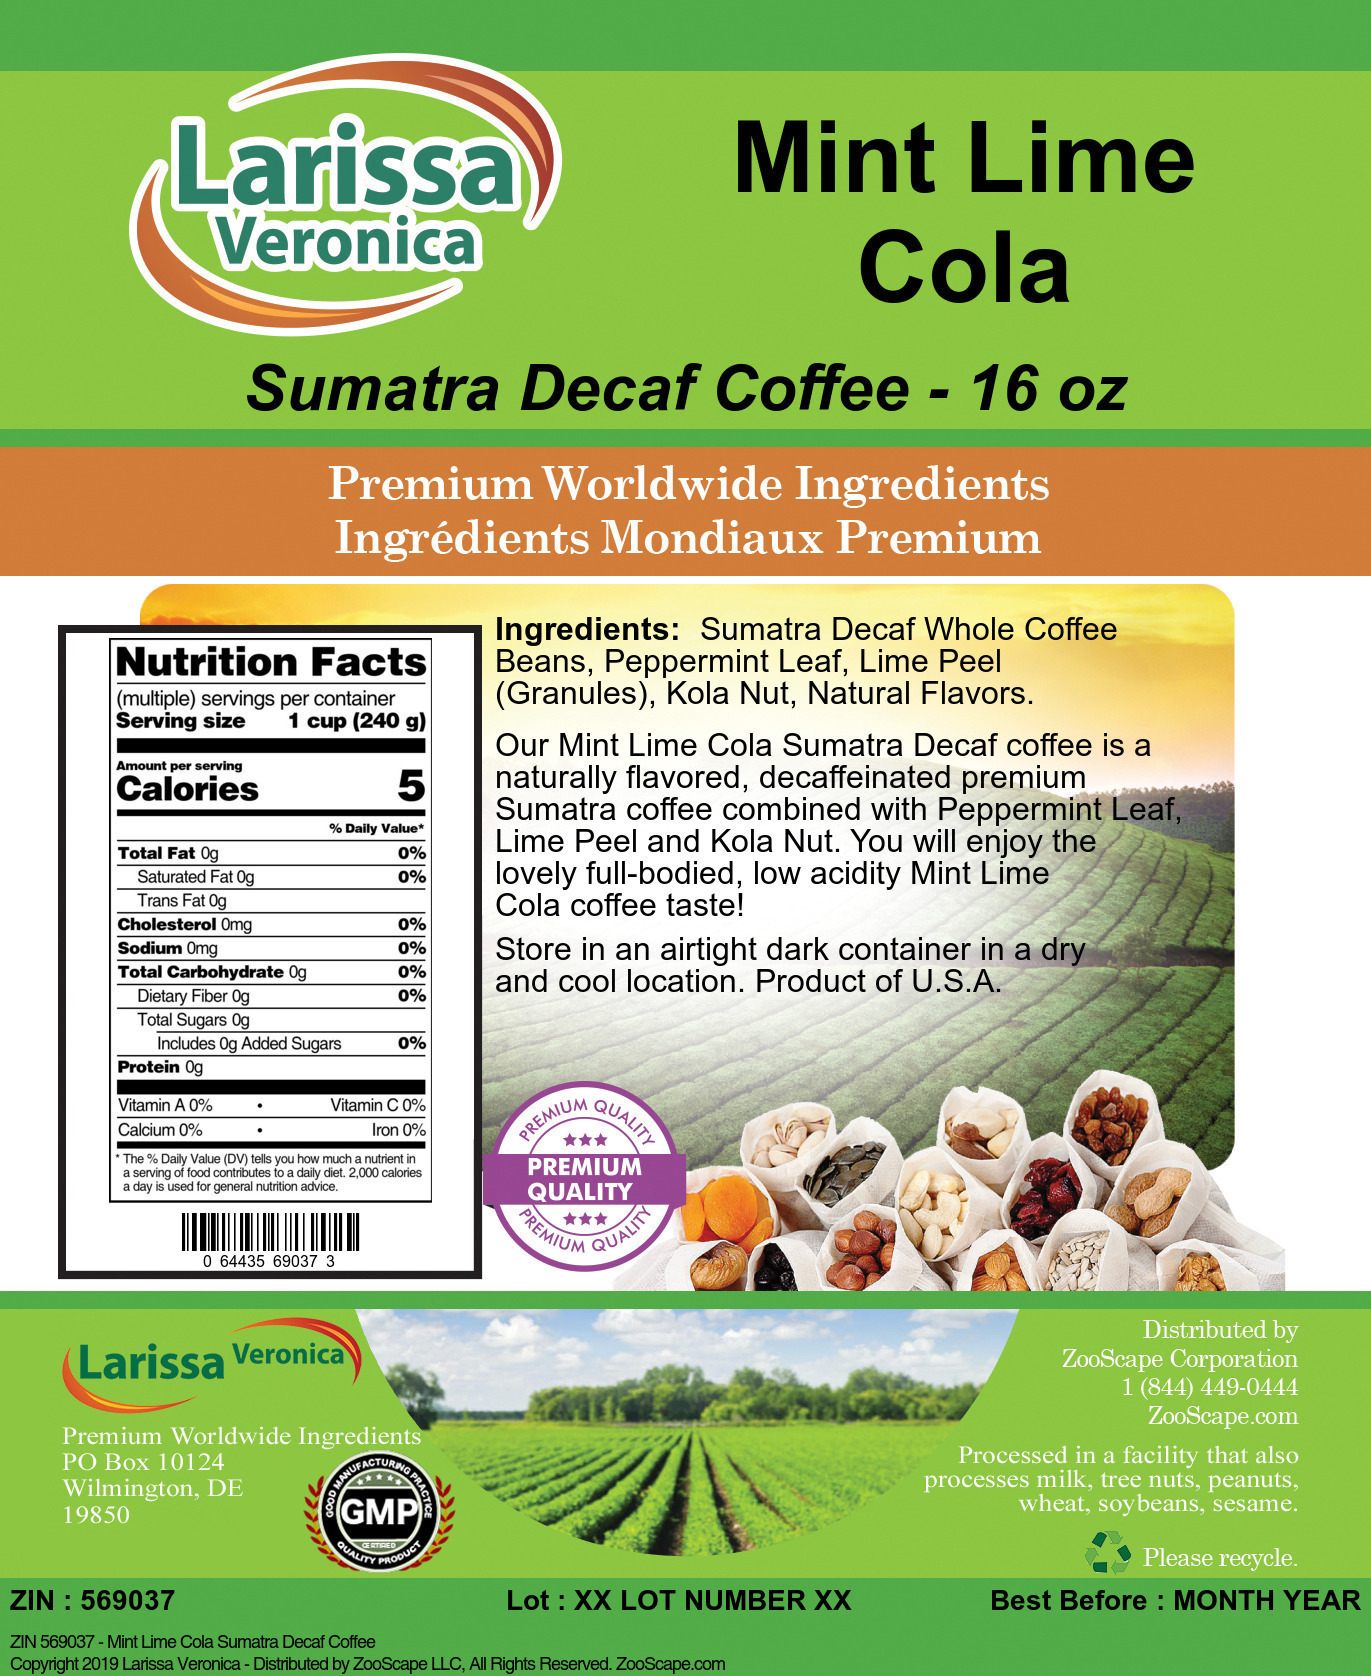 Mint Lime Cola Sumatra Decaf Coffee - Label